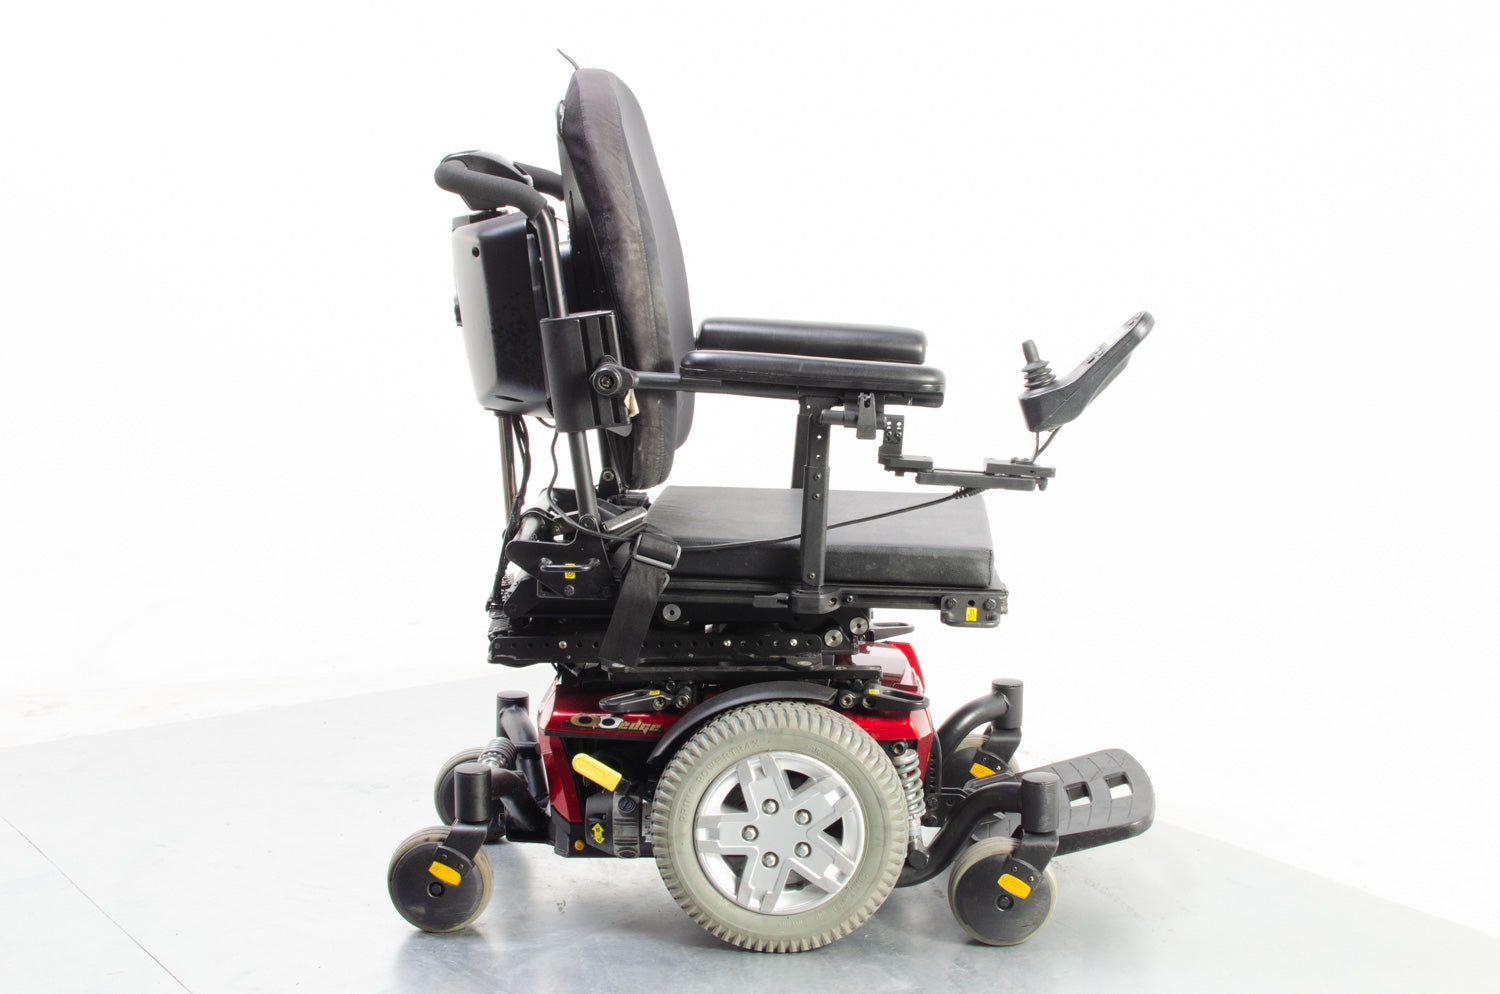 2015 Pride Quantum Q6 Edge Electric Wheelchair Powerchair Power Tilt Recline 4mph Used Red